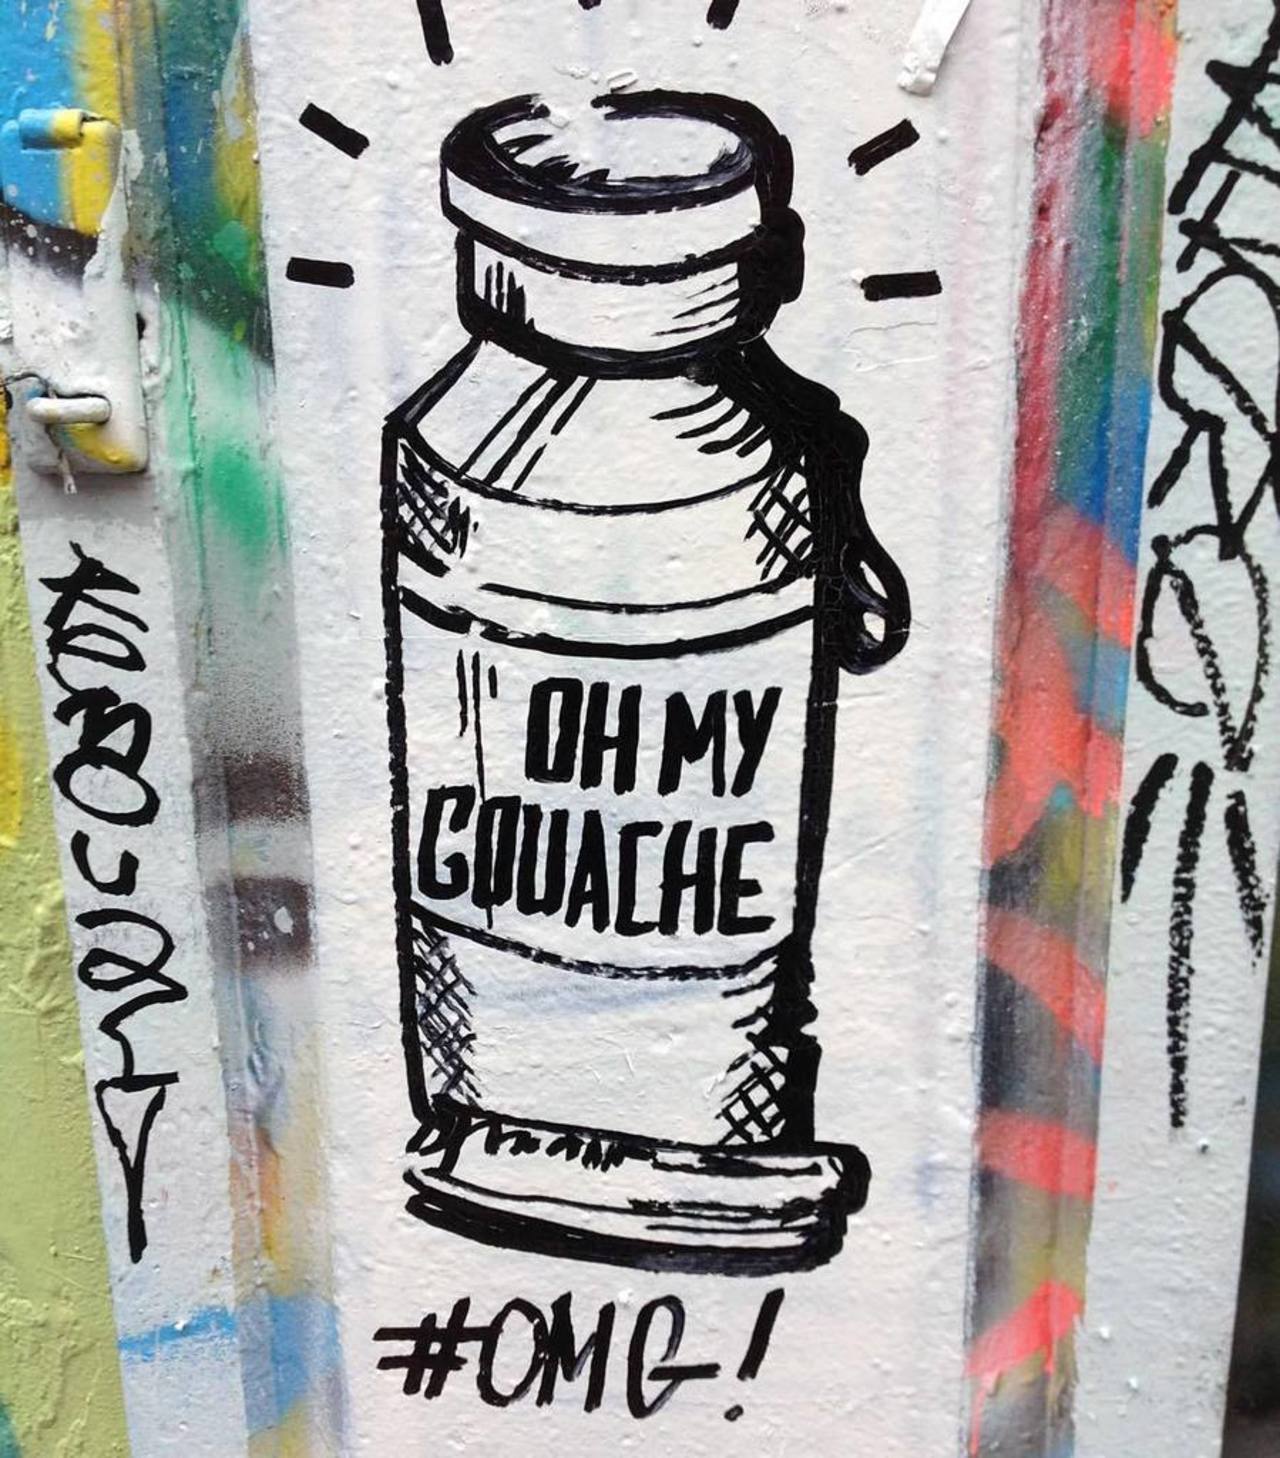 Gouache #omg #street #streetart #streetartparis #graff #graffiti #wallart #sprayart #urban #urbain #urbanart #urbai… http://t.co/5JTuCvVx4b